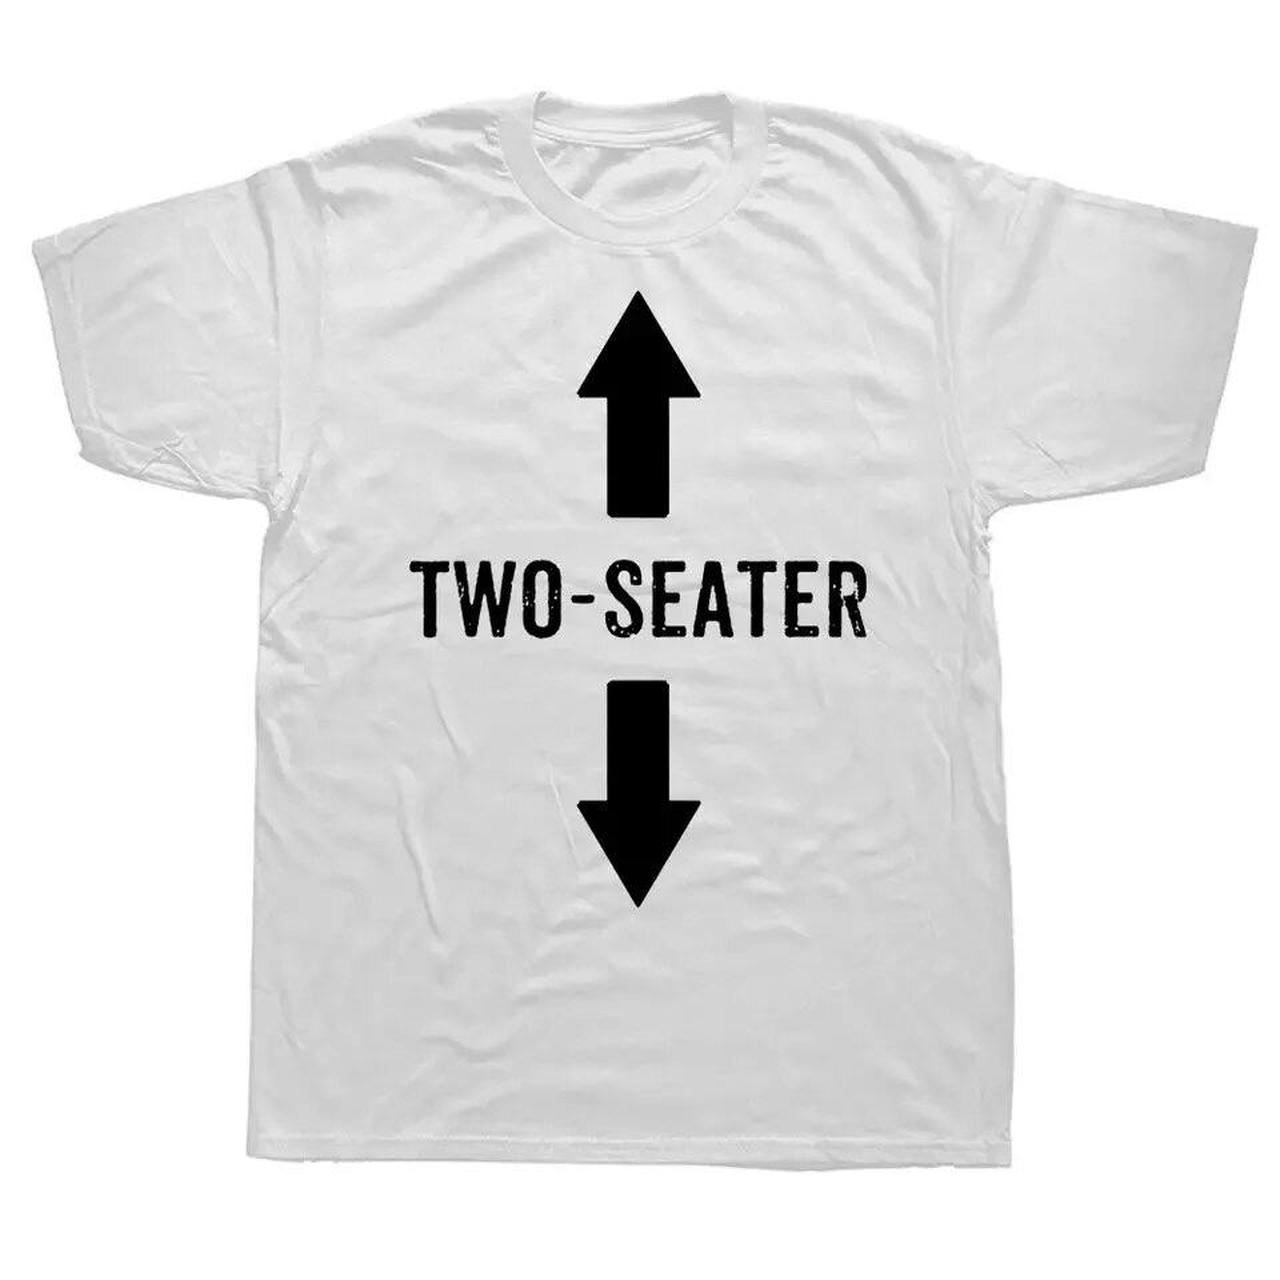 Funny shirt $25 ‼️DM if interested‼️ - Depop